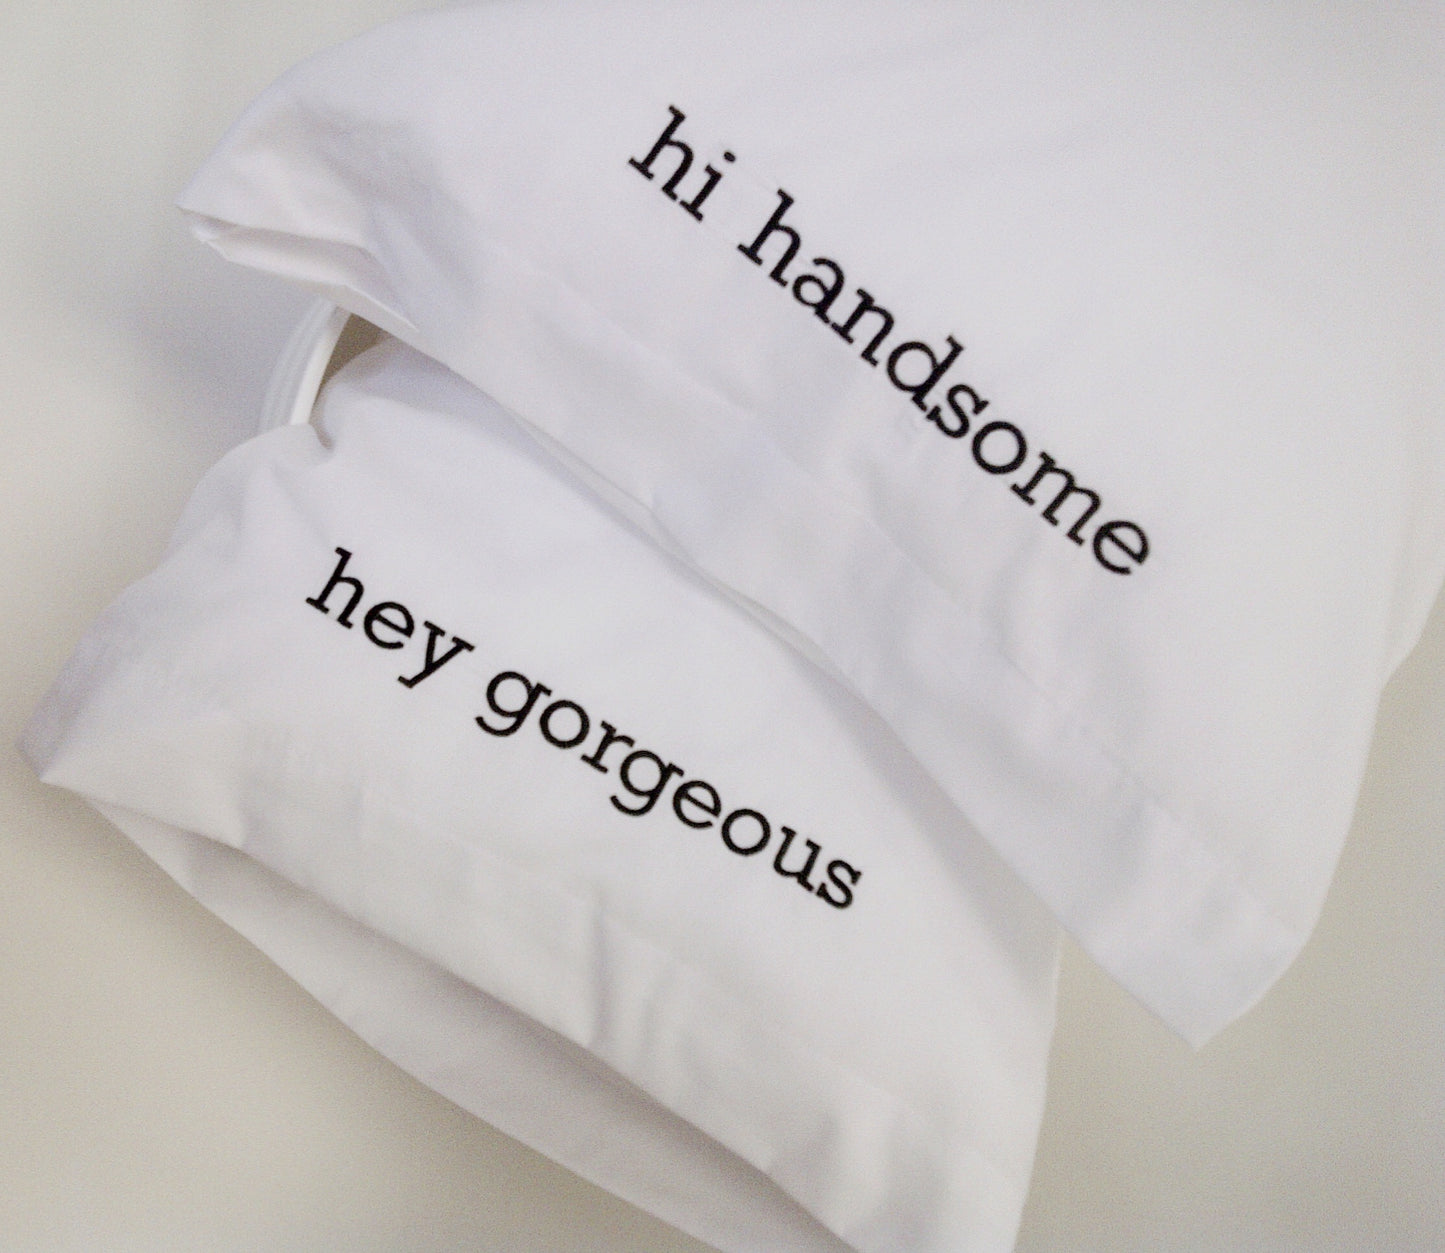 hi handsome / hey gorgeous pillowcase set